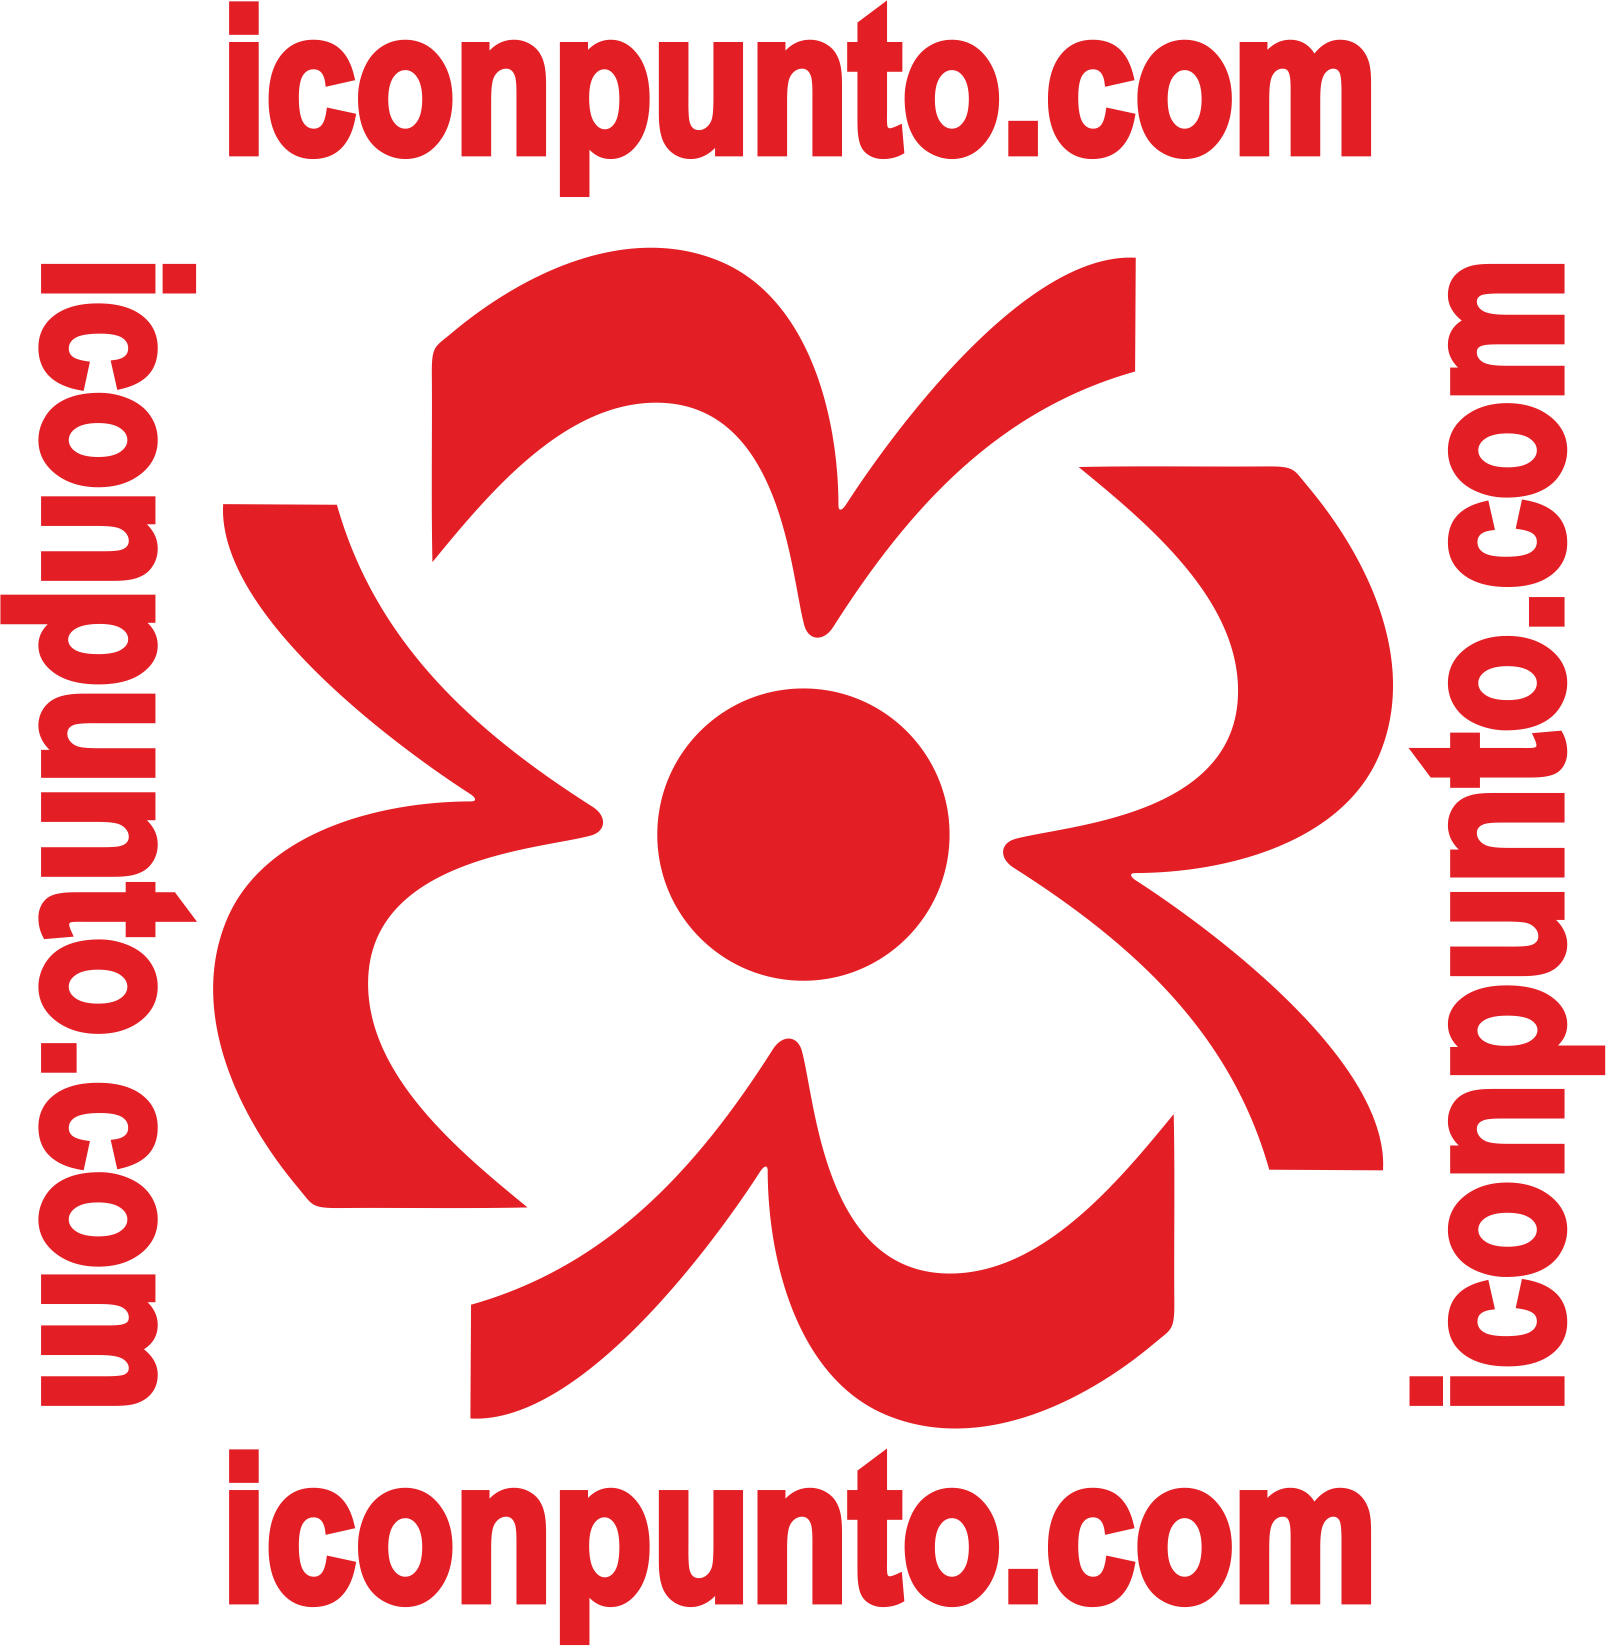 Iconpunto